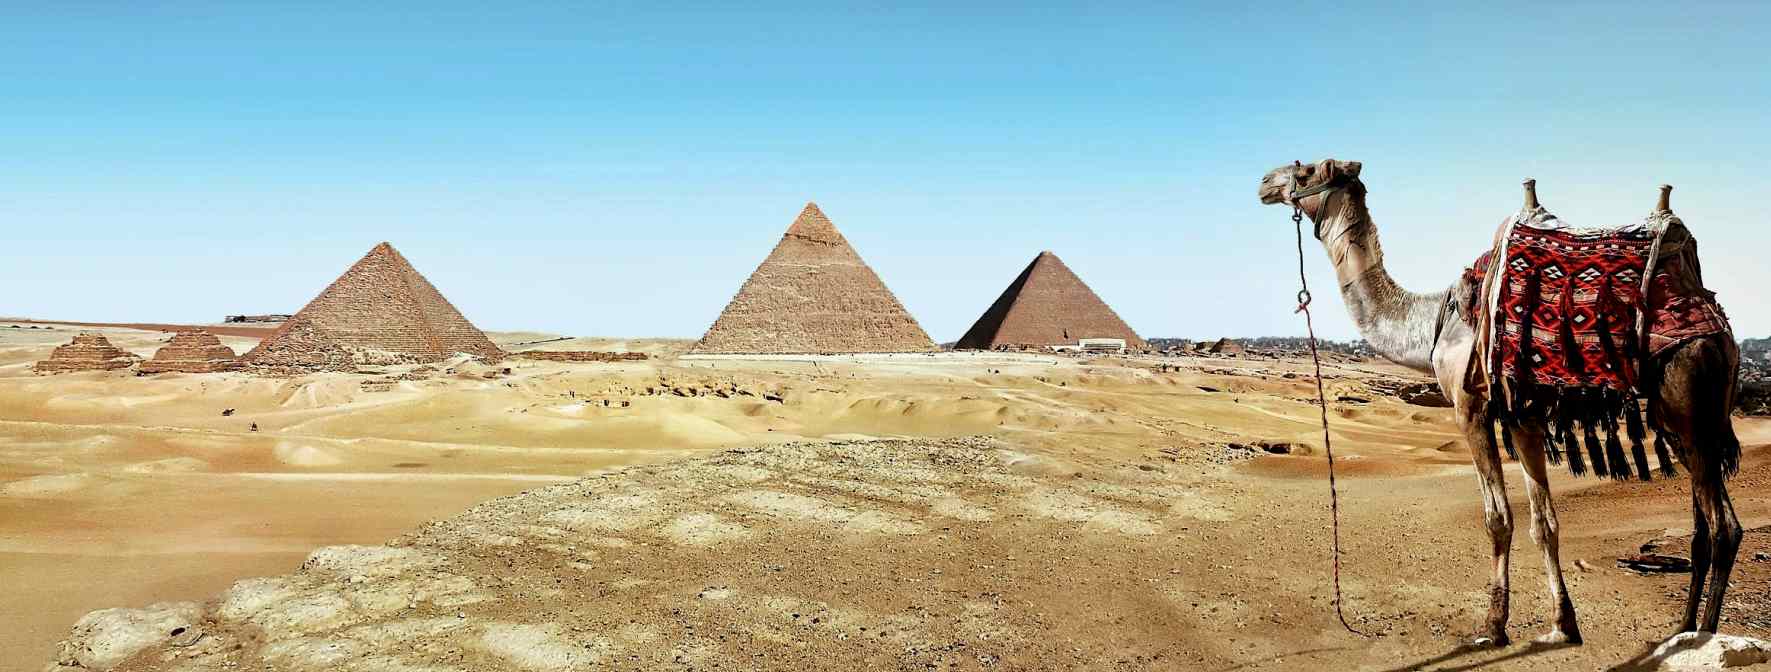 pyramidy-egypt-free-download-pexels-photo-931881.jpg